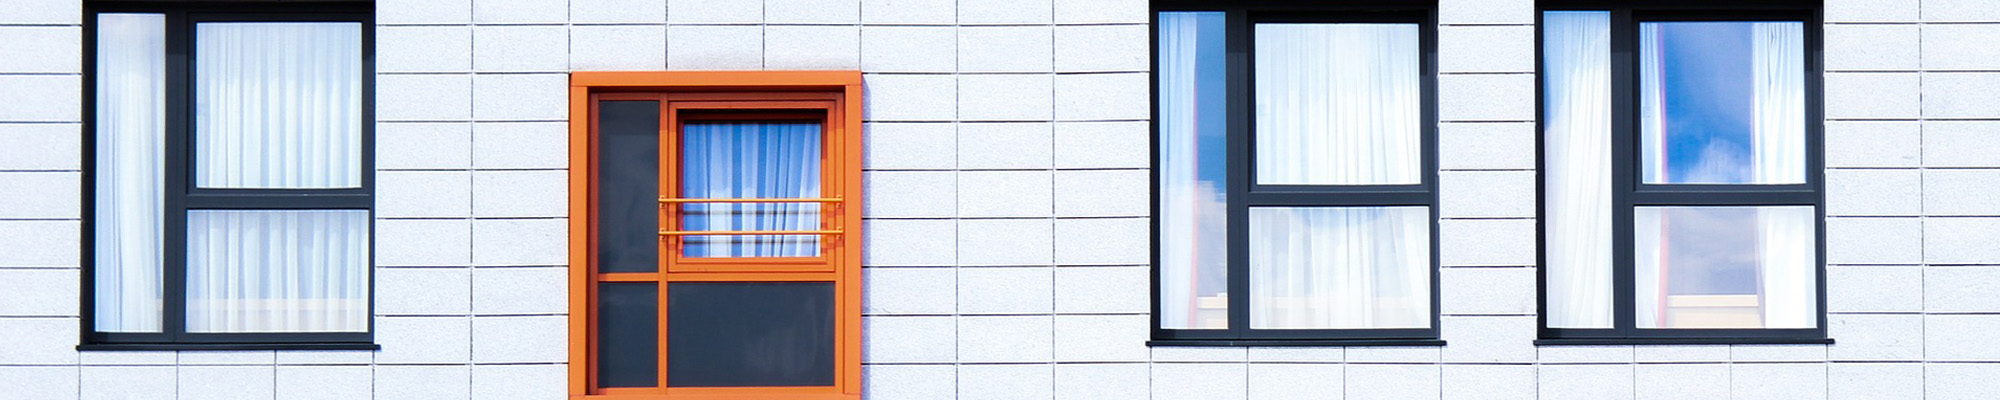 windows on apartment building